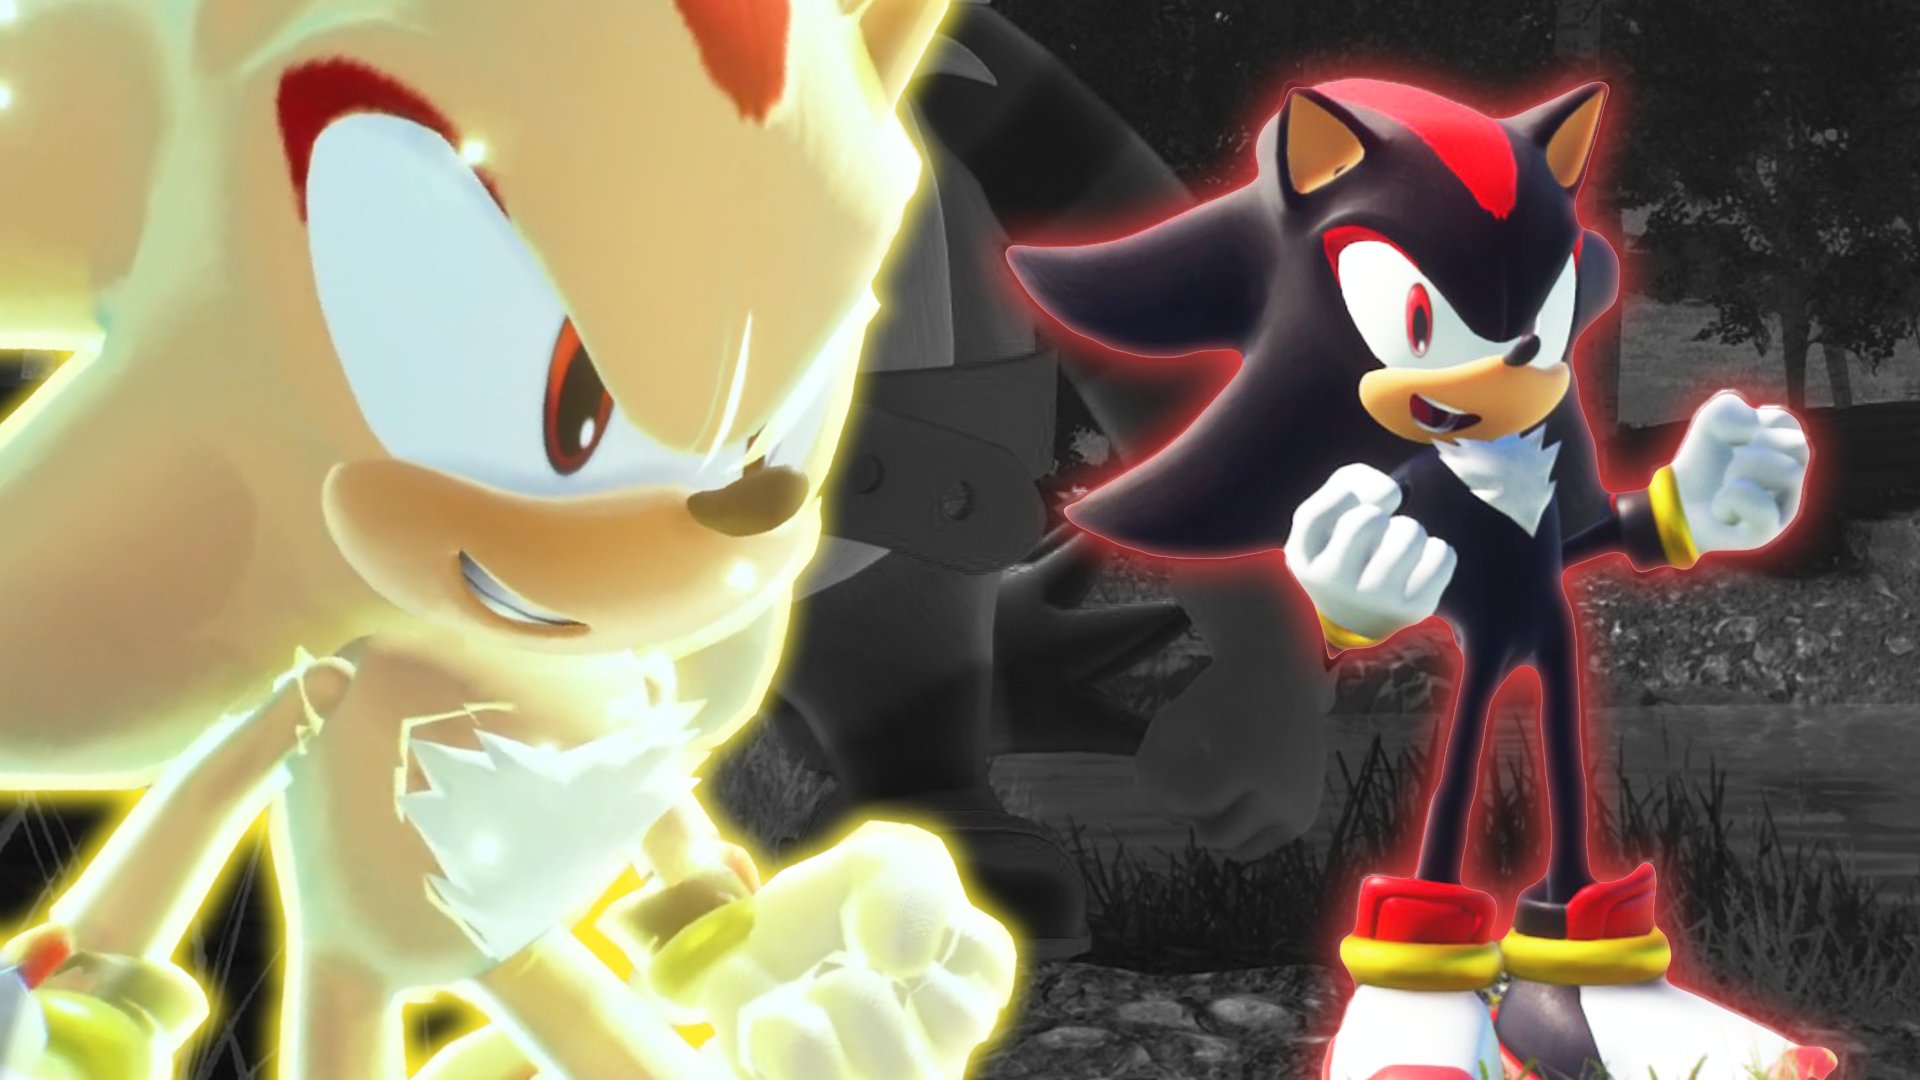 Shadow the Hedgehog in Sonic 1 - Hack Showcase! 